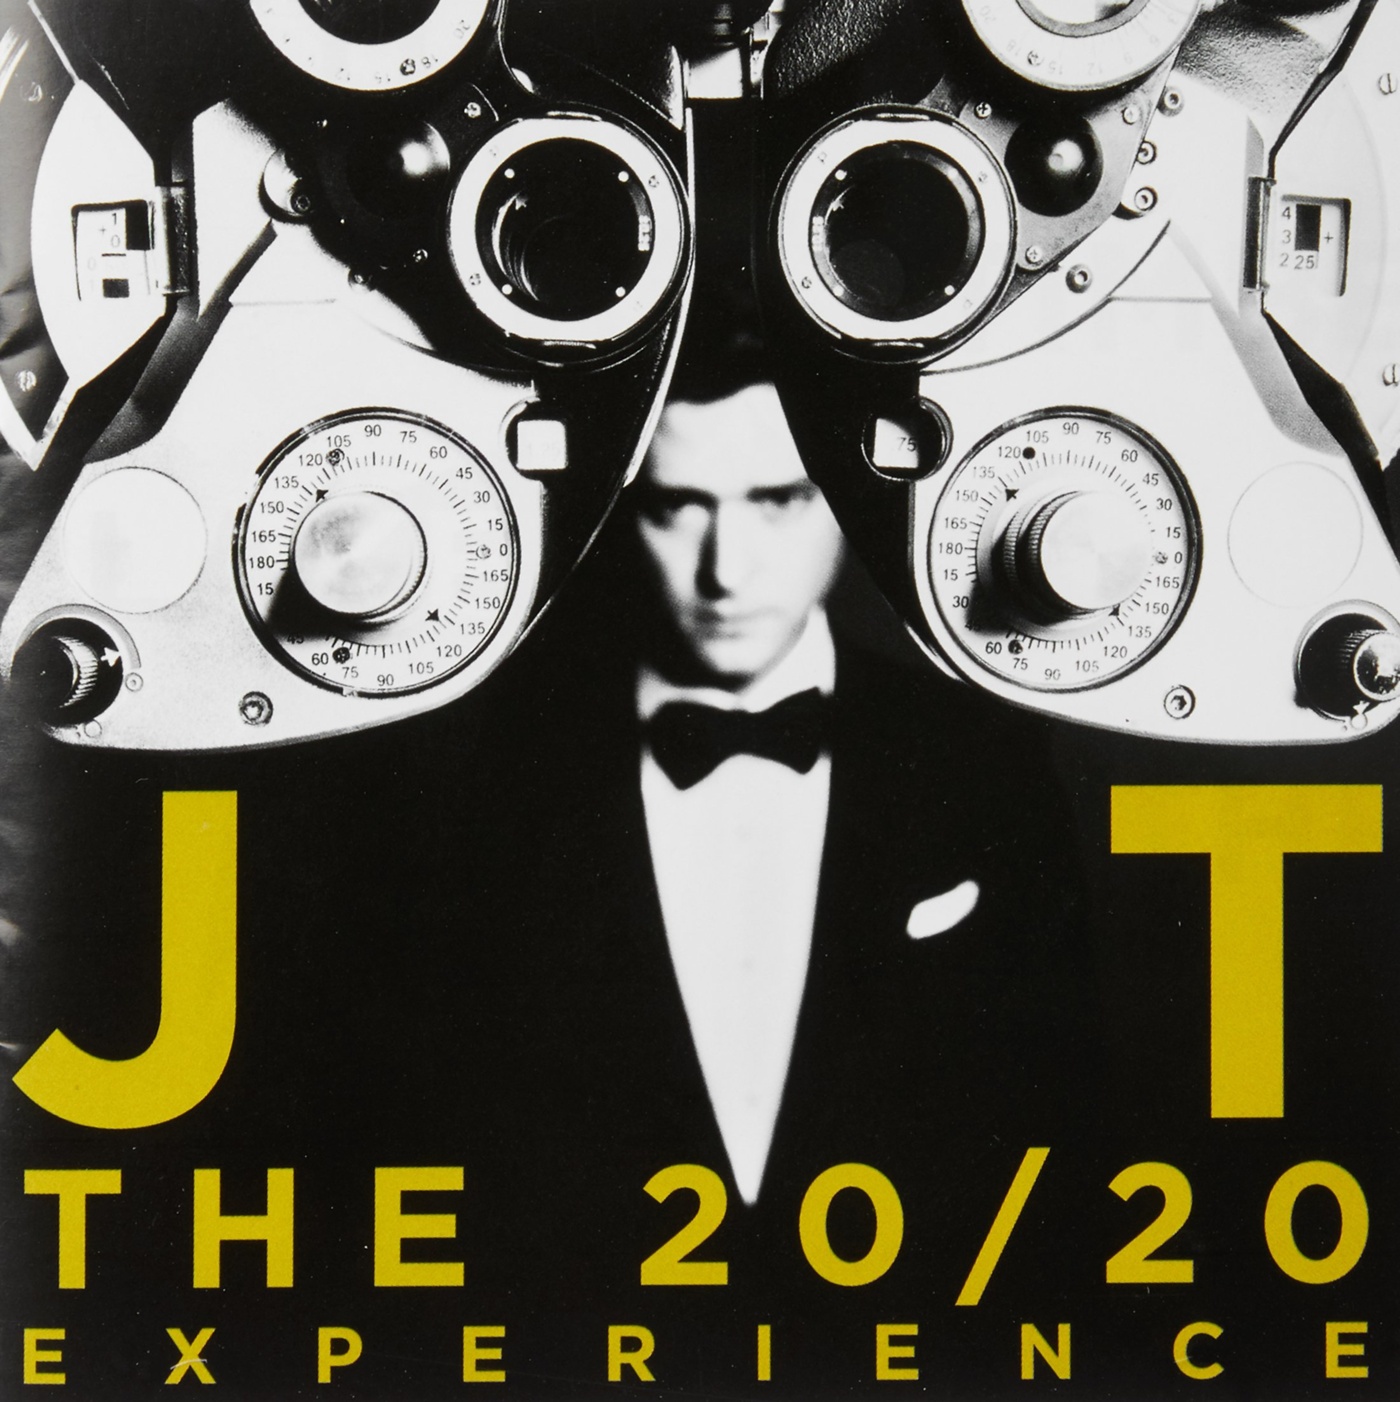 The 20/20 experience Джастин Тимберлейк. The 20/20 experience 2 of 2. Justin Timberlake Mirrors обложка. Justin Timberlake album.